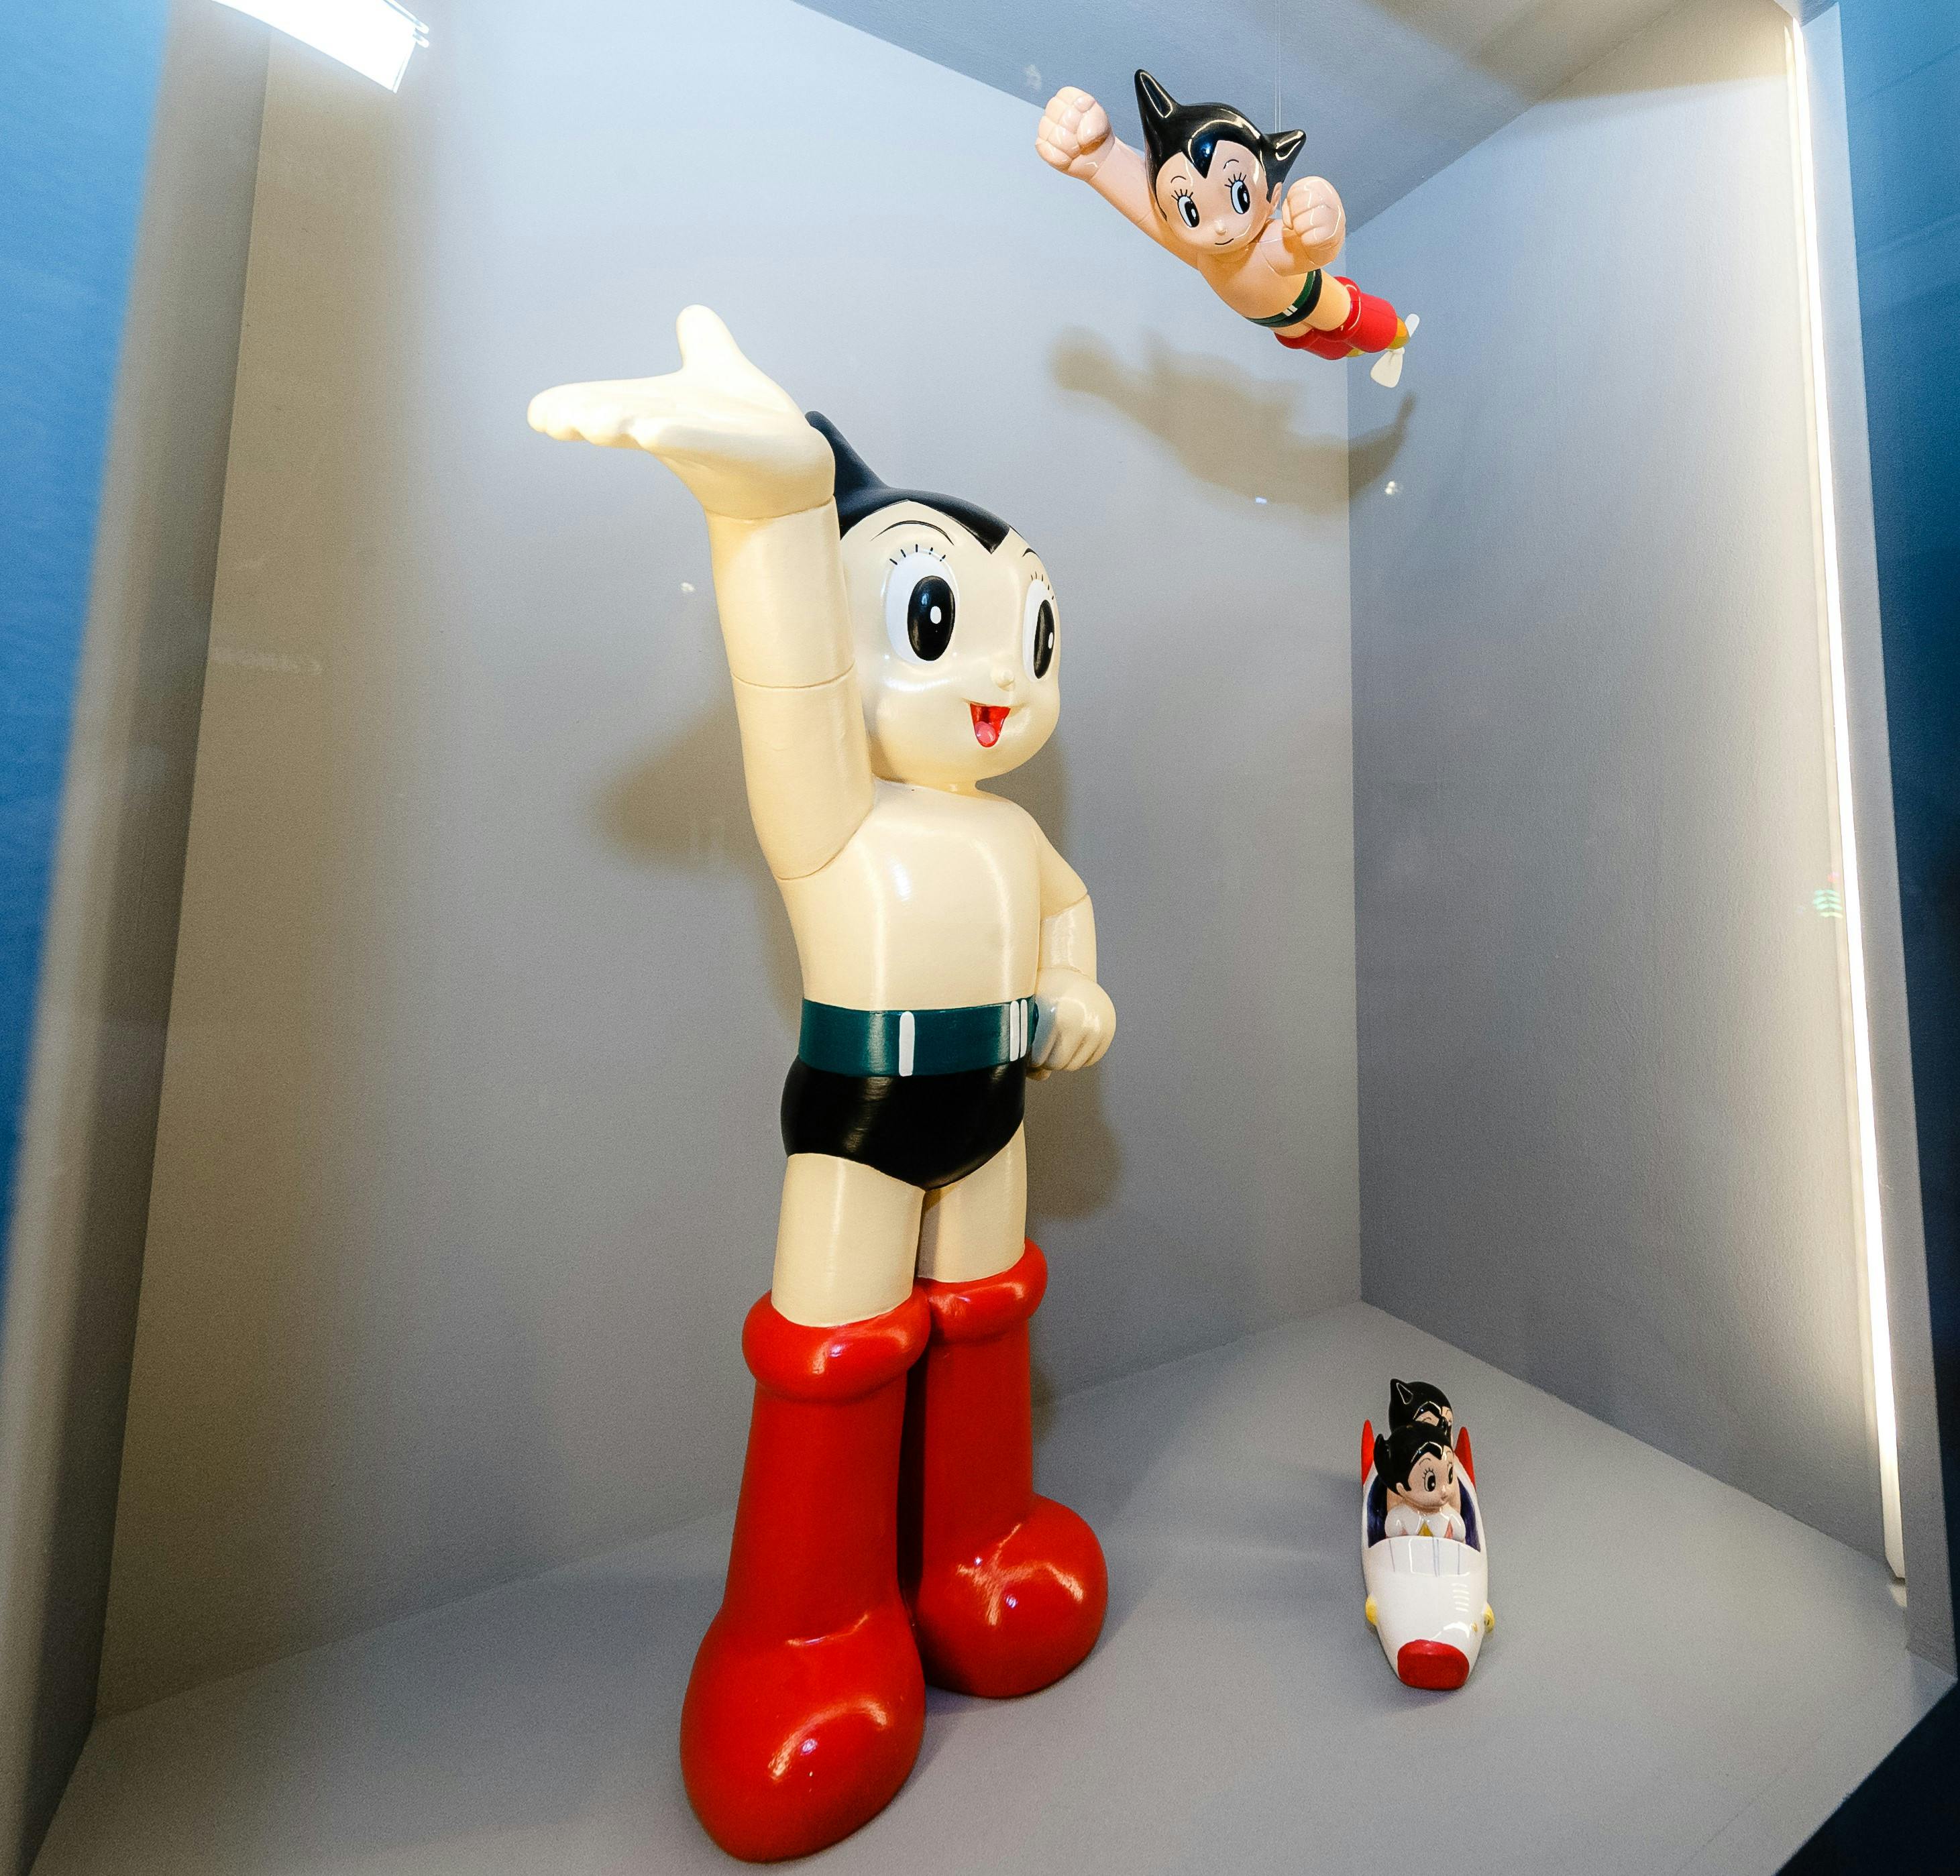 Astro Boy-figur til en Japansk kunstudstilling i Hamborg, 2016.&nbsp;
